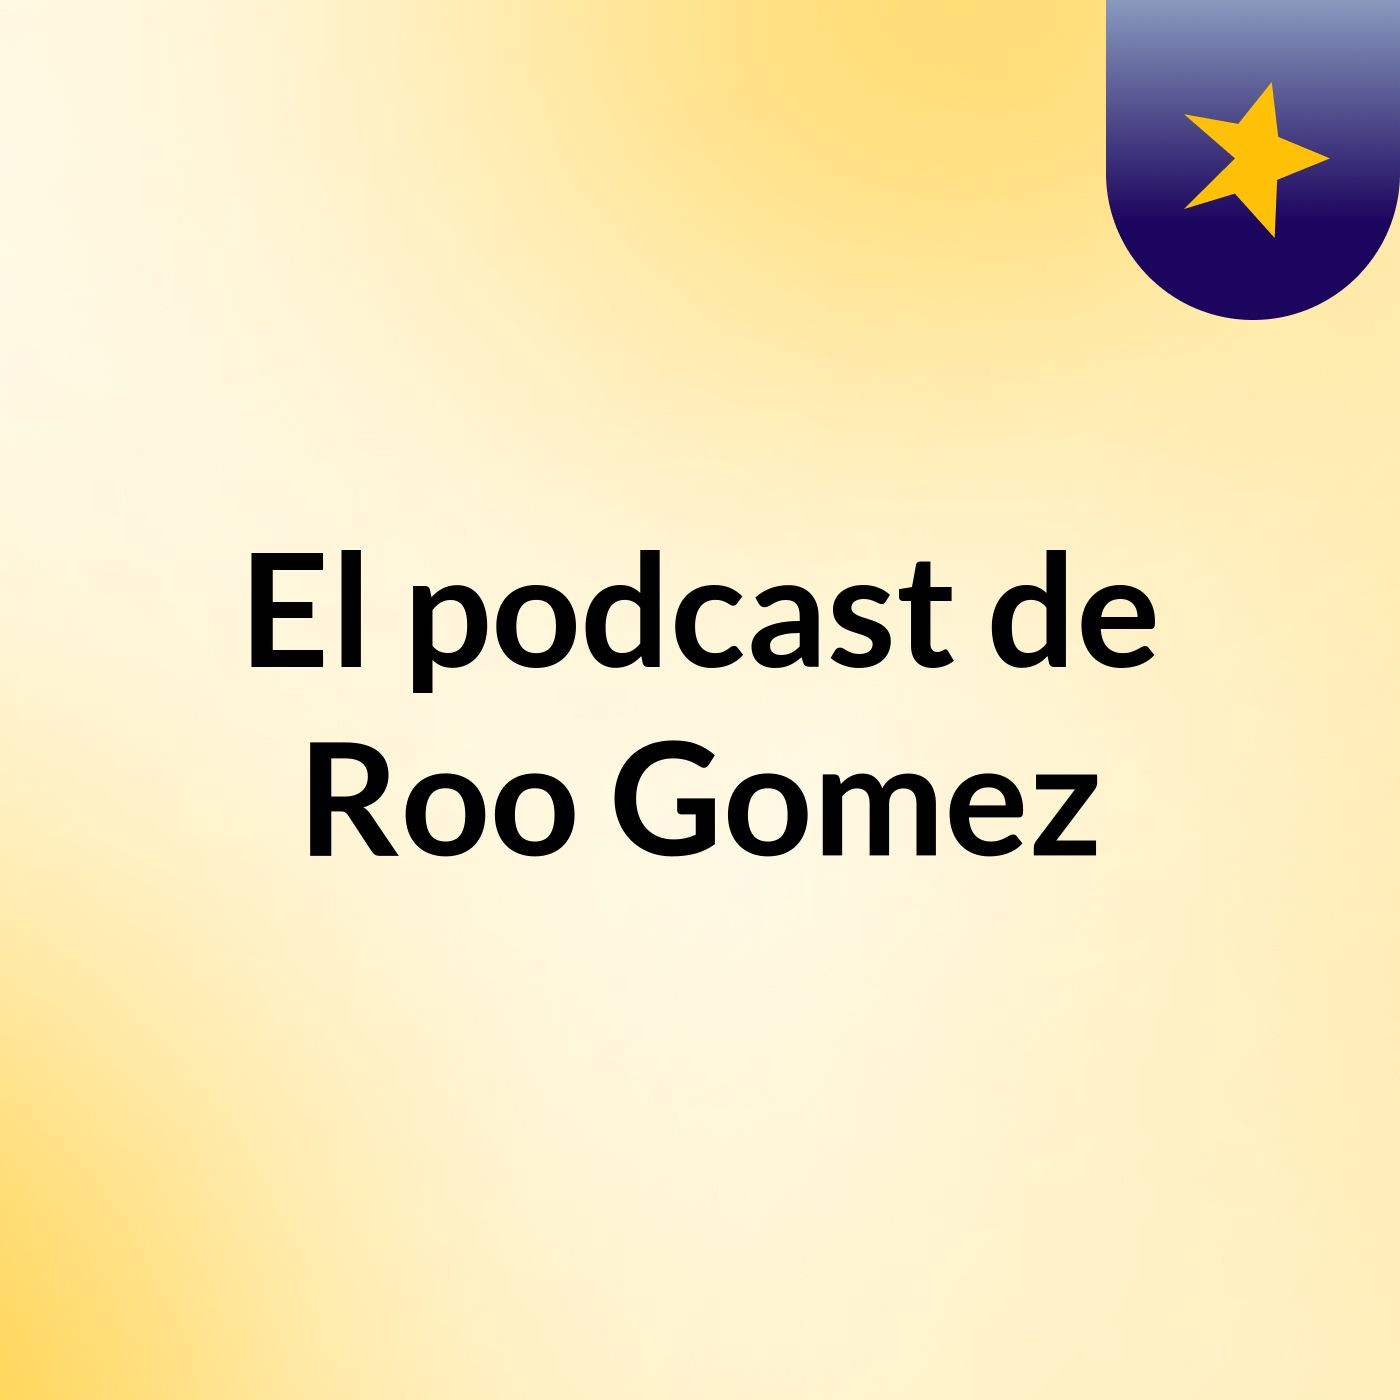 El podcast de Roo Gomez